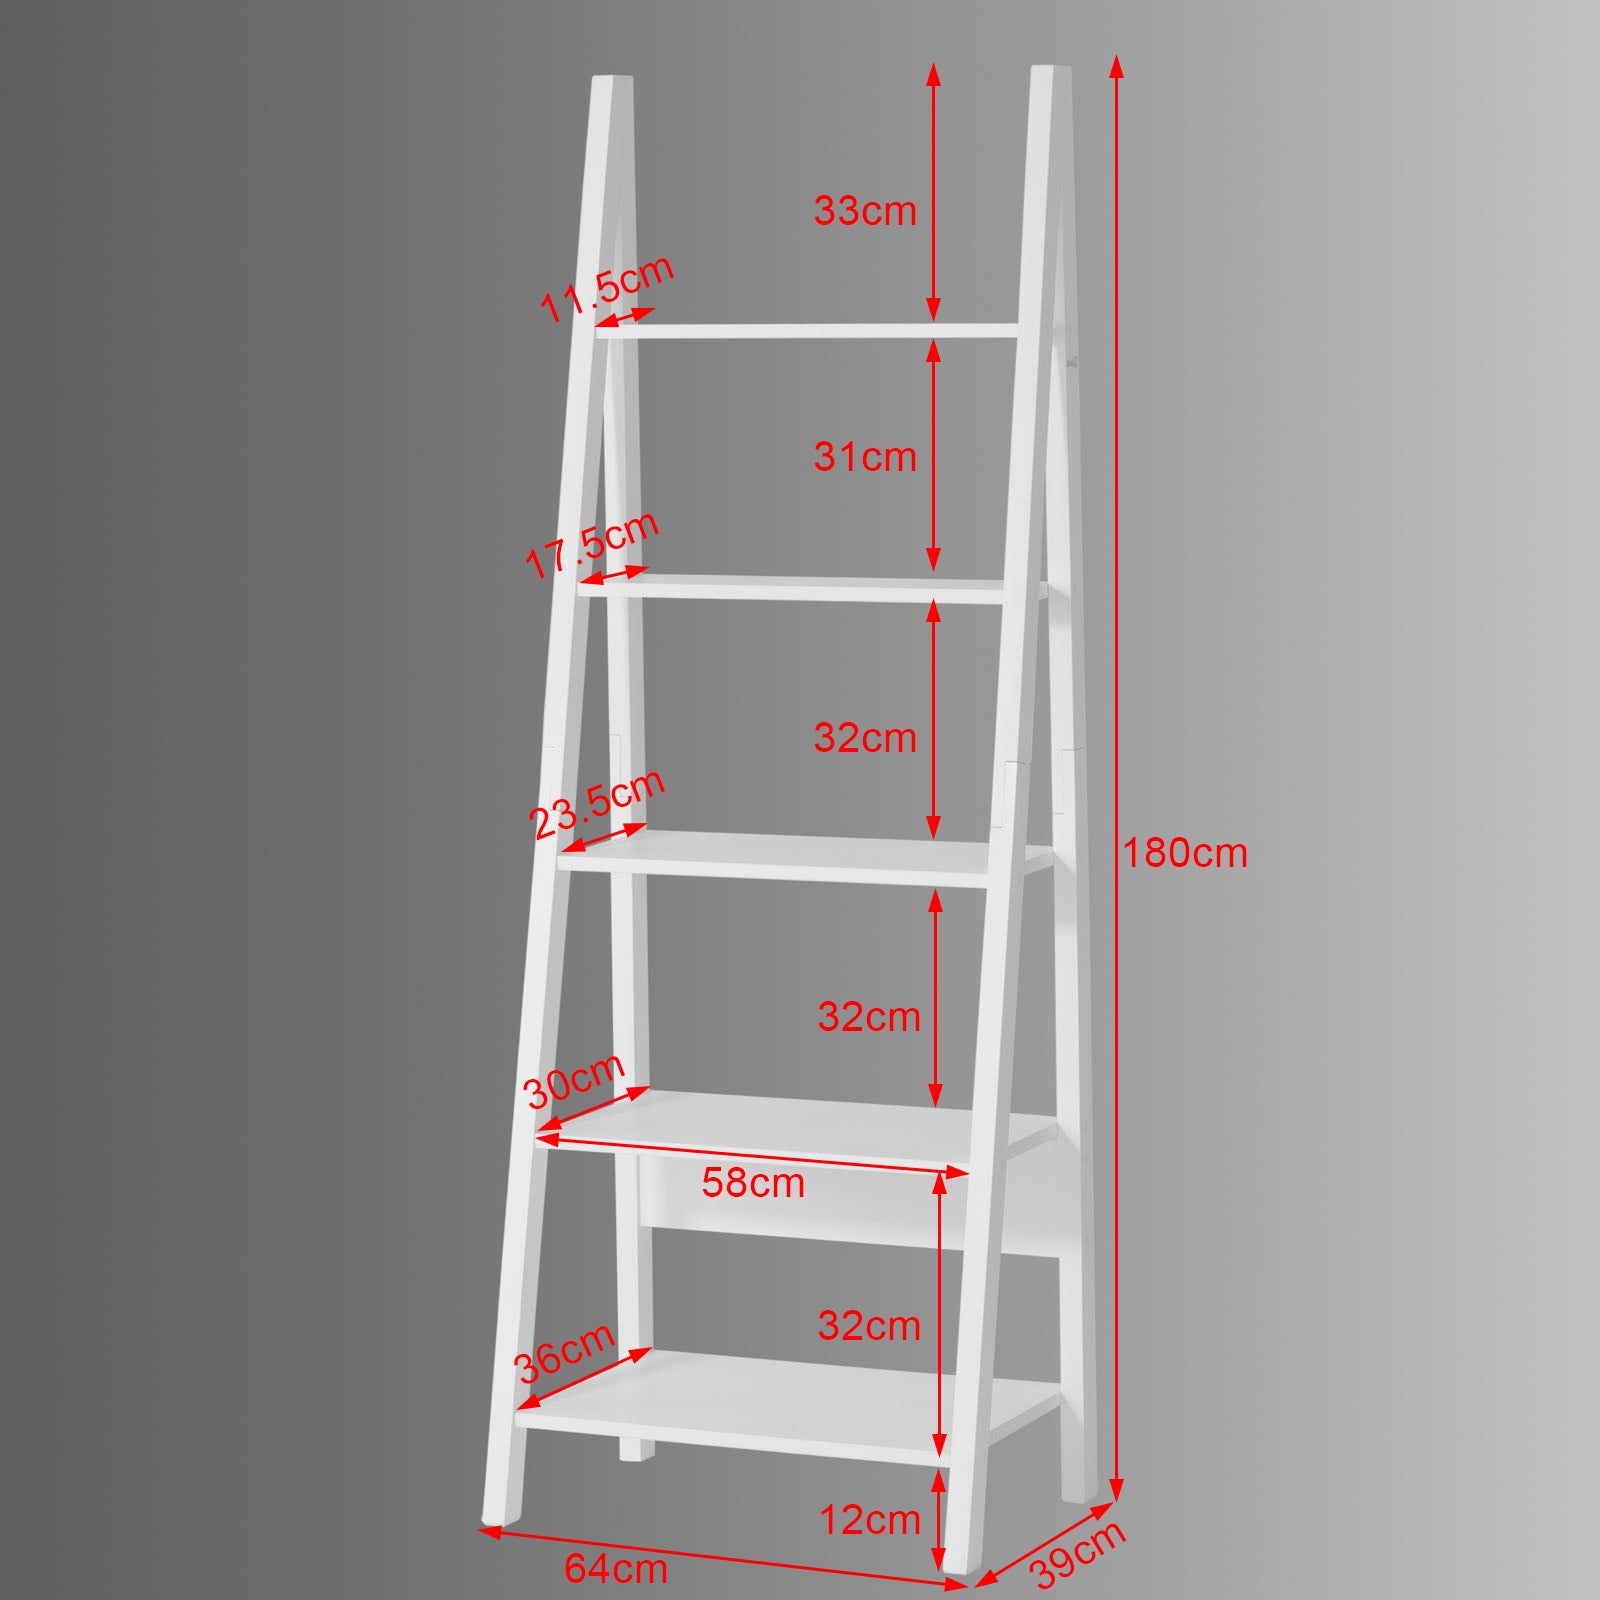 SoBuy FRG61-W Wood 5 Tiers Ladder Shelf Bookcase,Storage Display Shelving,Wall Shelf,White